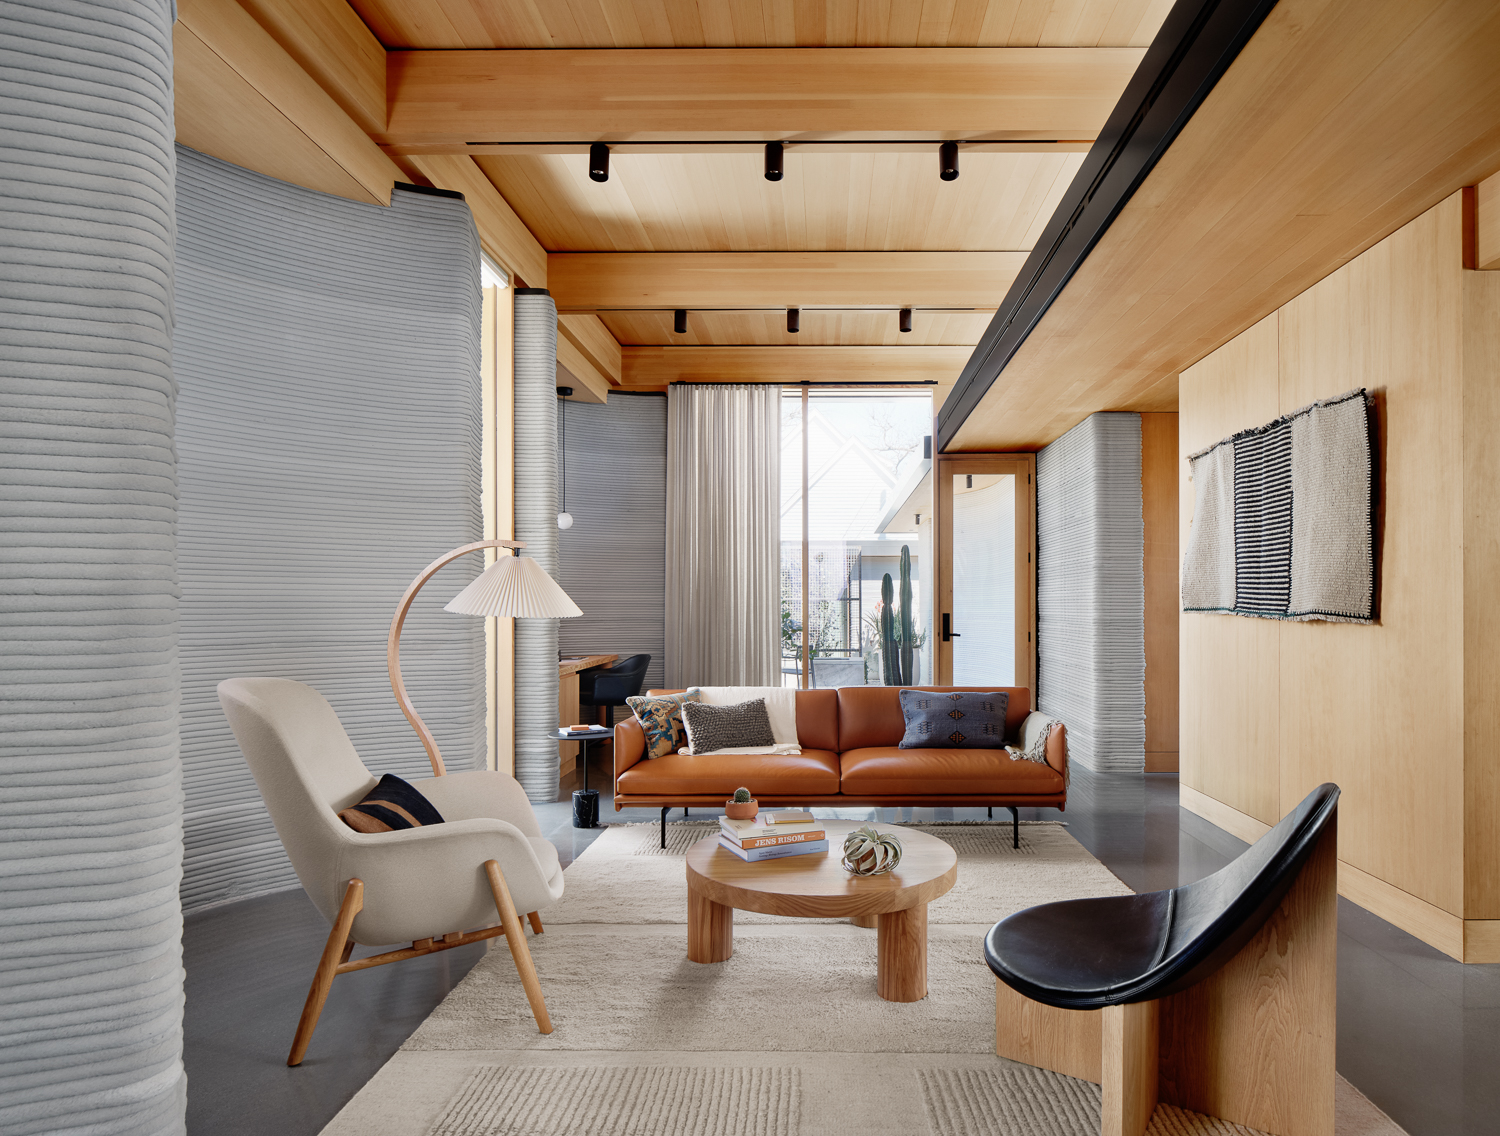 ICON's 3D printed House Zero interior.